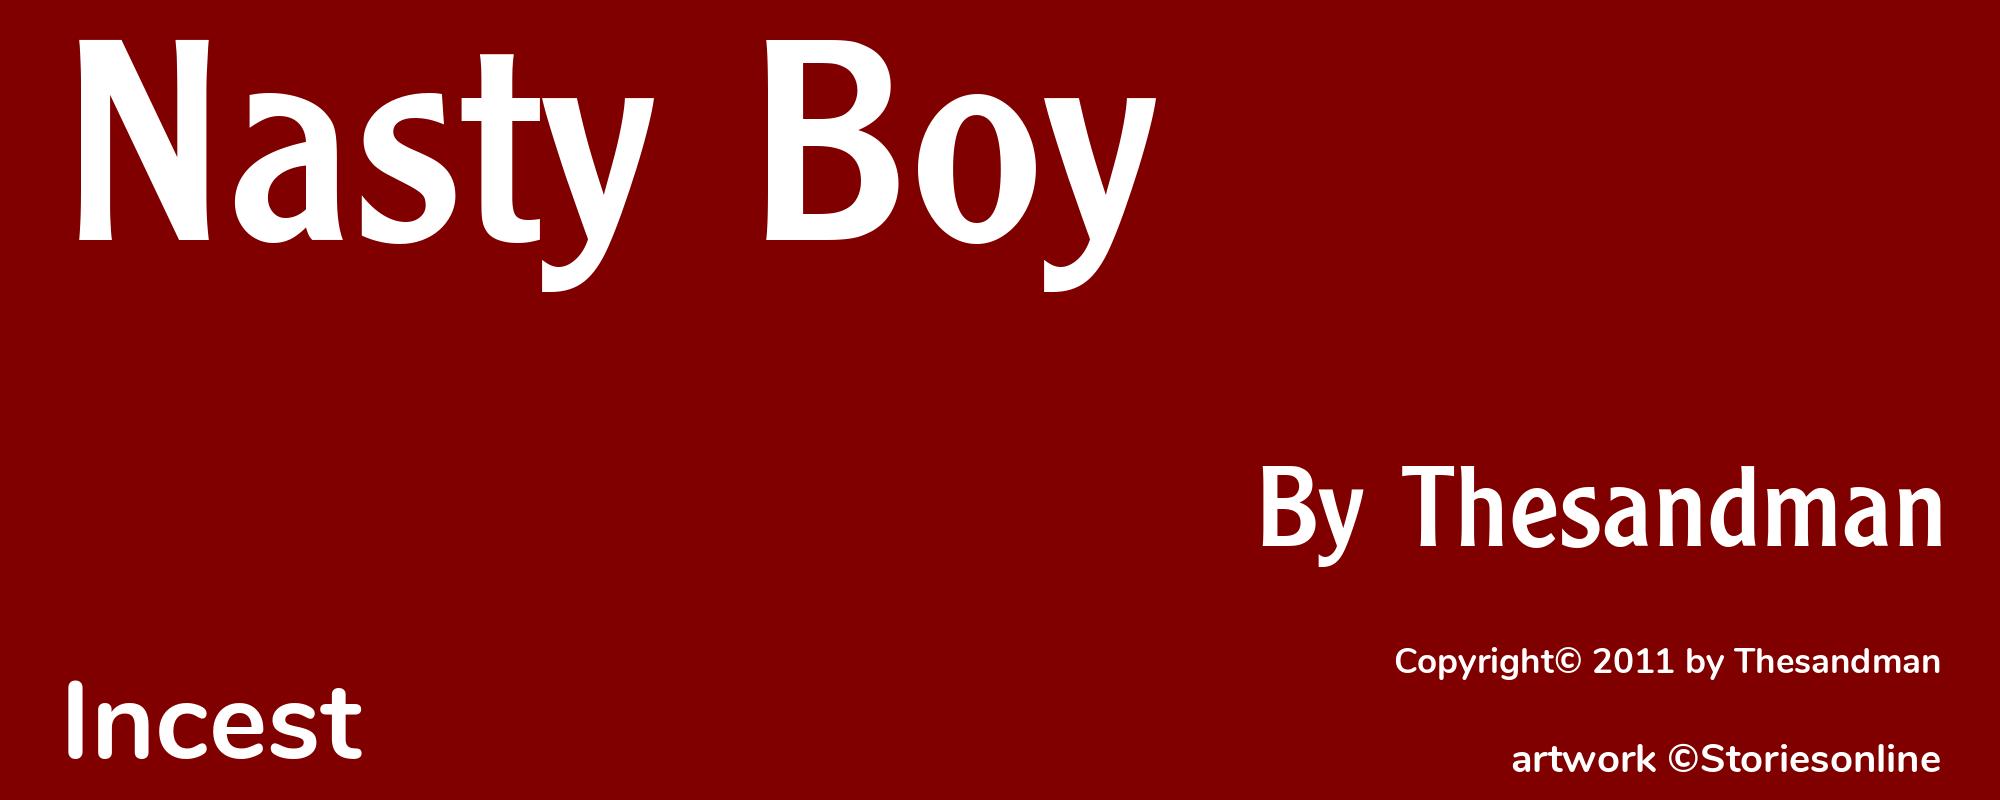 Nasty Boy - Cover